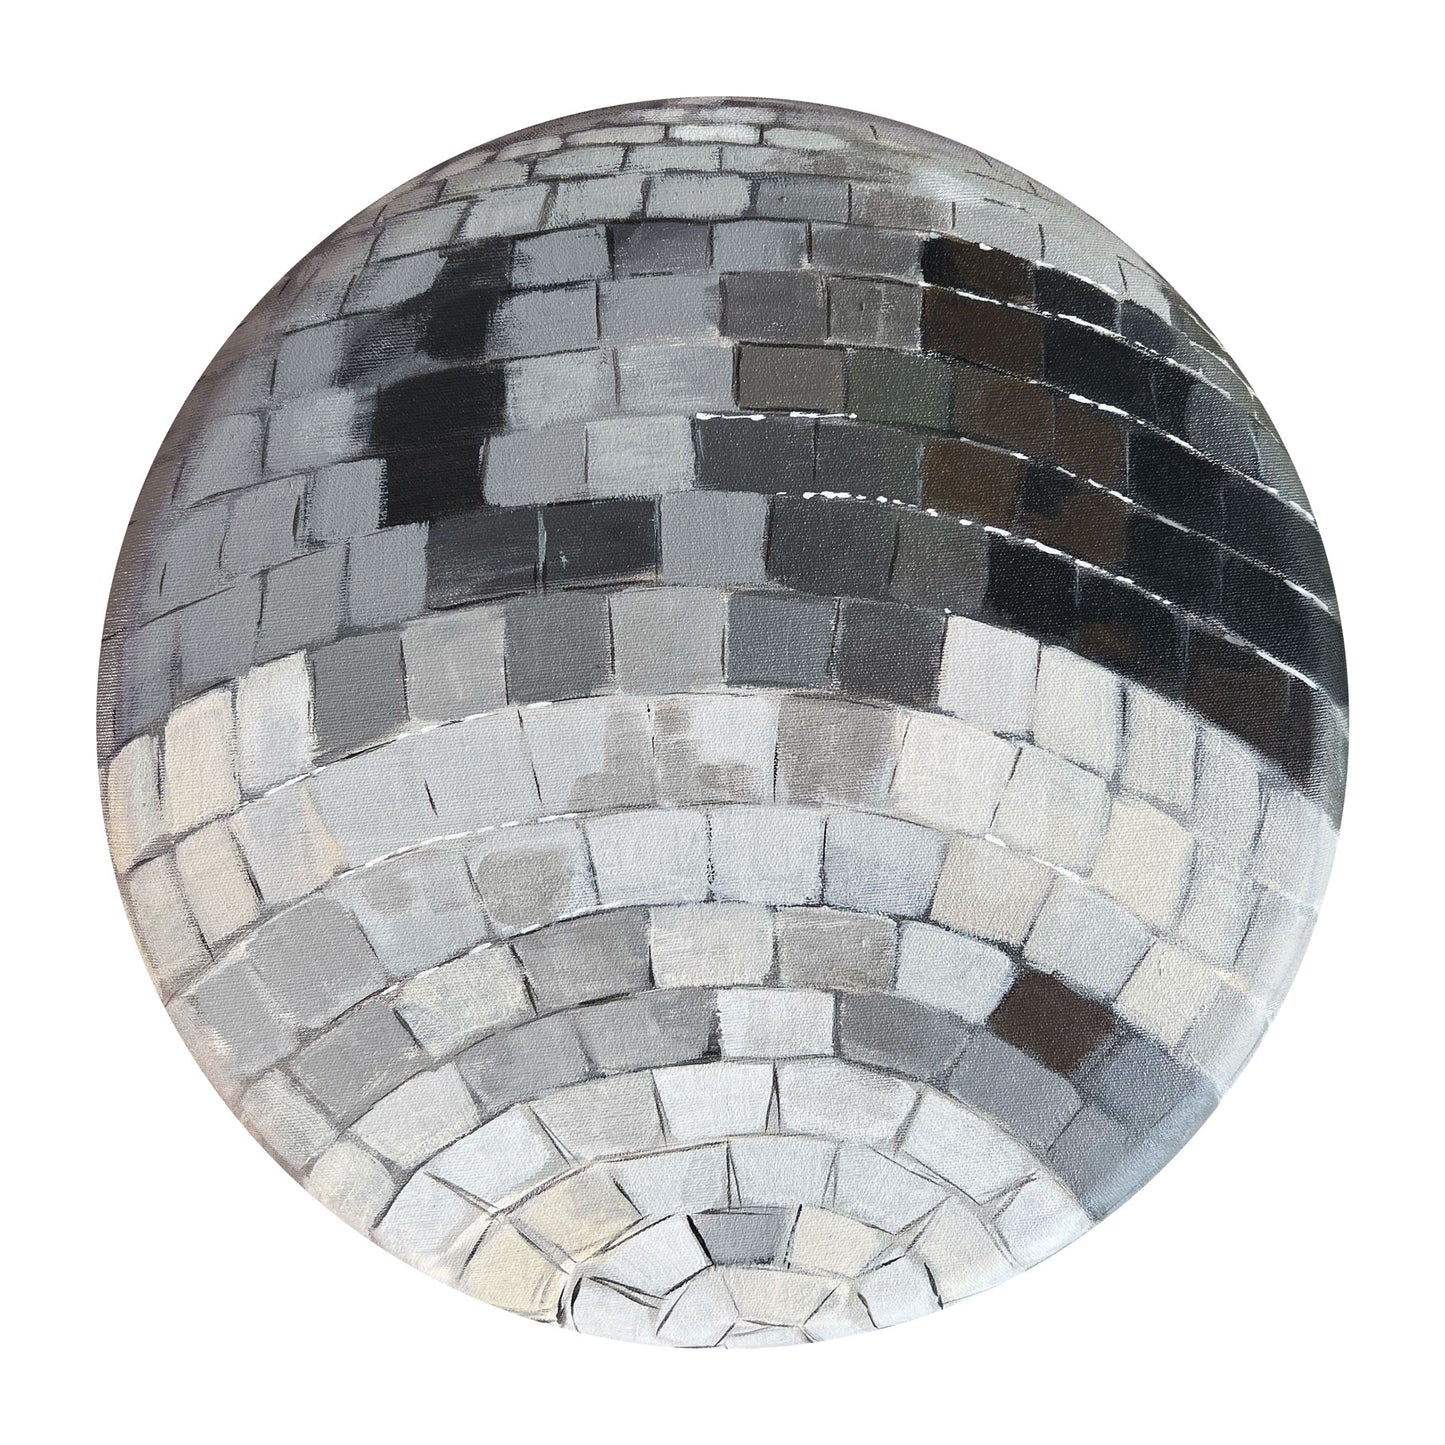 Achromatic-o II 16" Original Disco Ball Painting